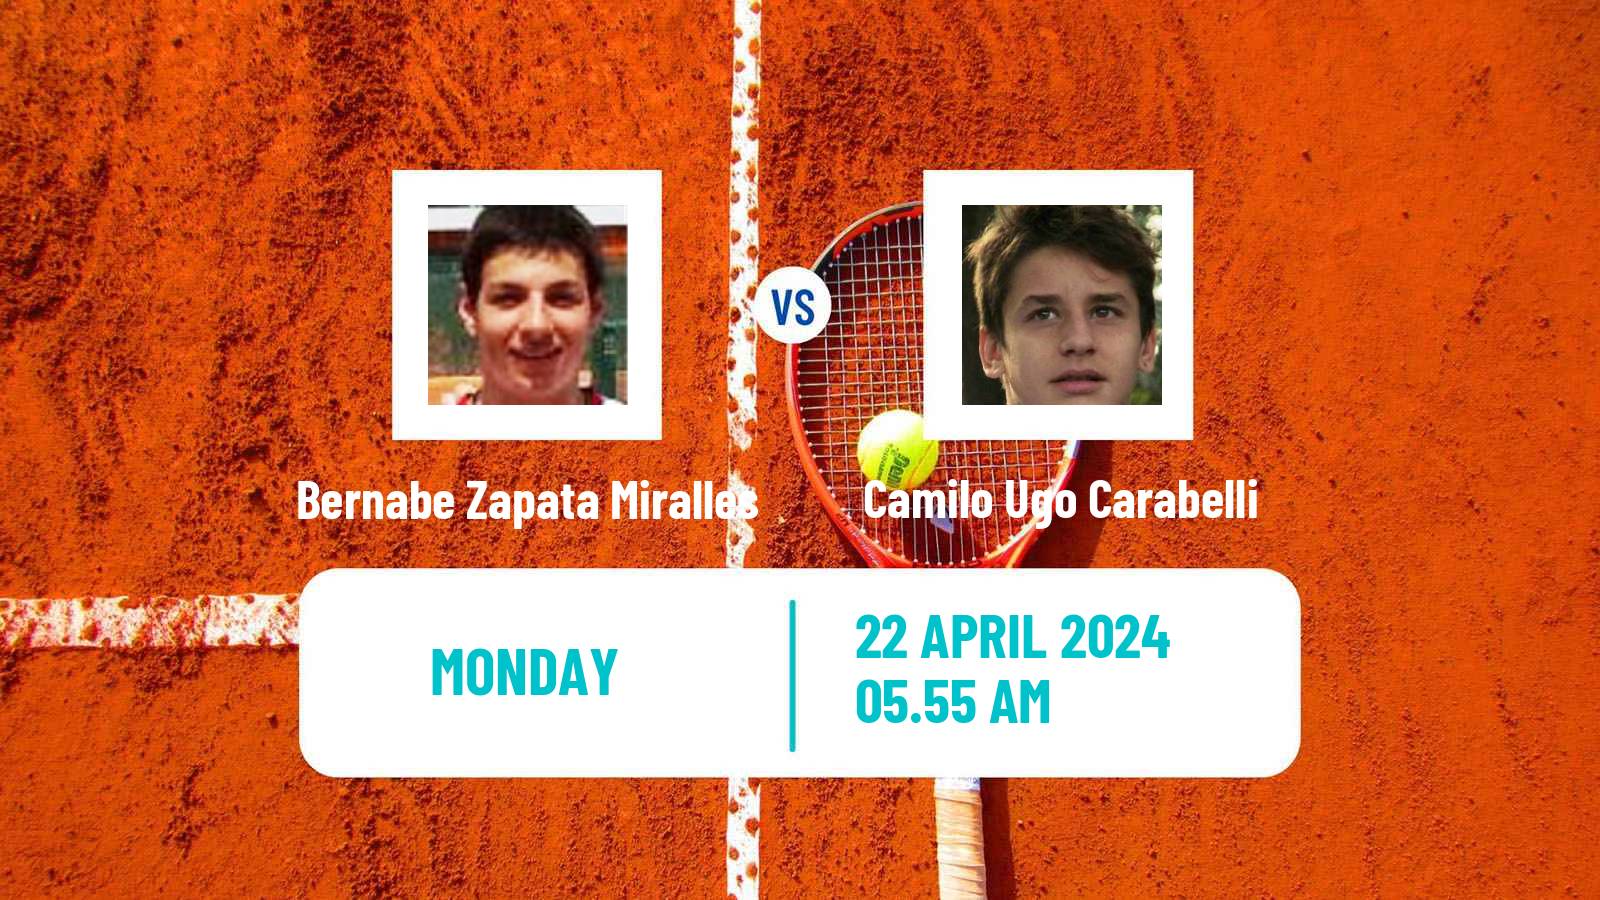 Tennis ATP Madrid Bernabe Zapata Miralles - Camilo Ugo Carabelli